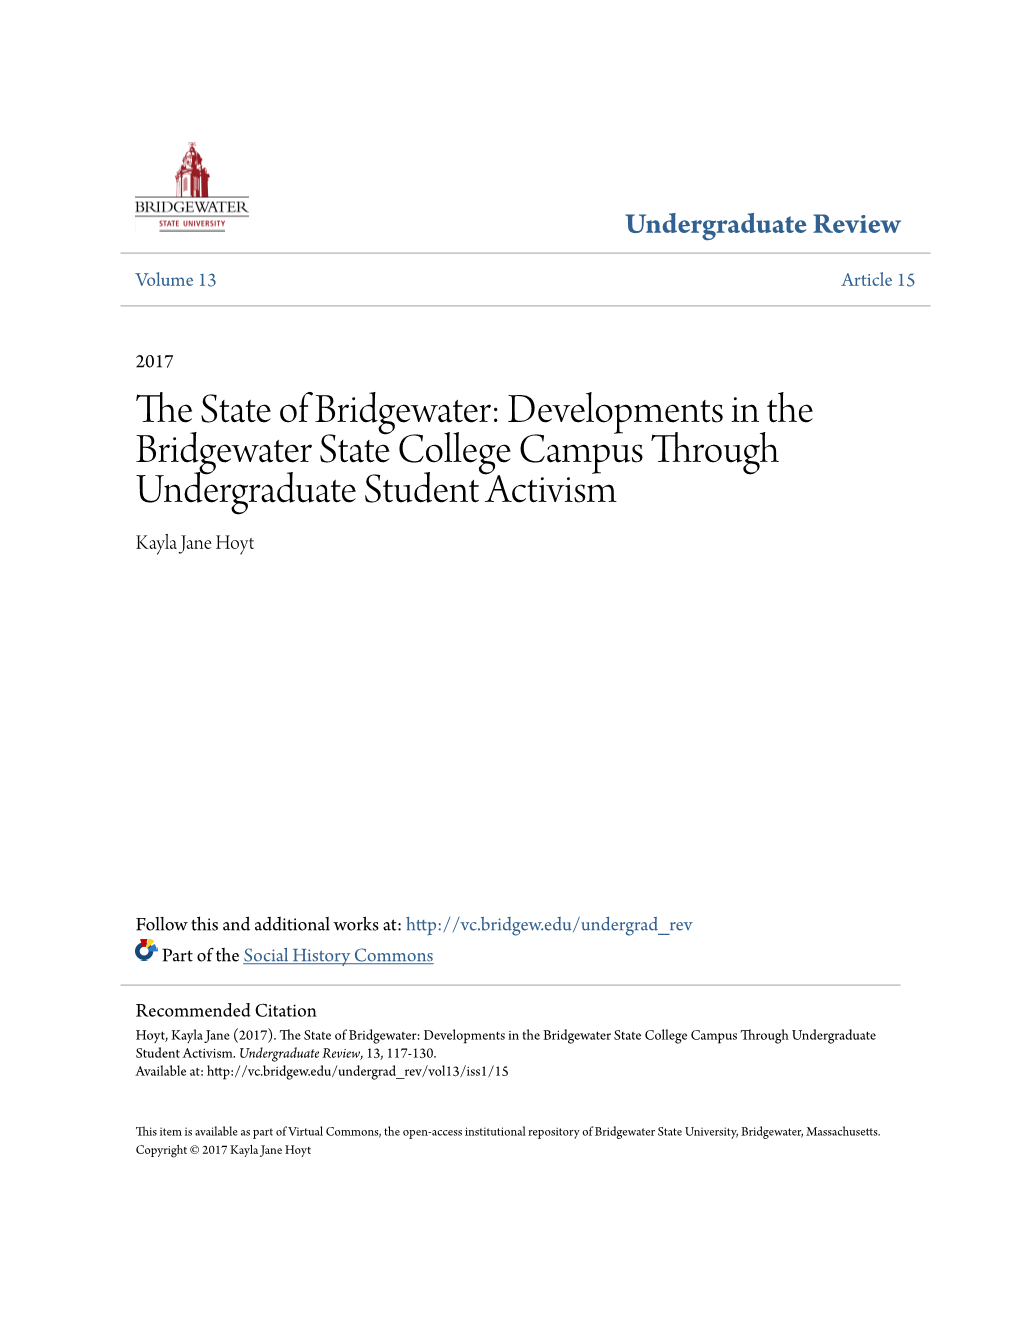 Developments in the Bridgewater State College Campus Through Undergraduate Student Activism Kayla Jane Hoyt